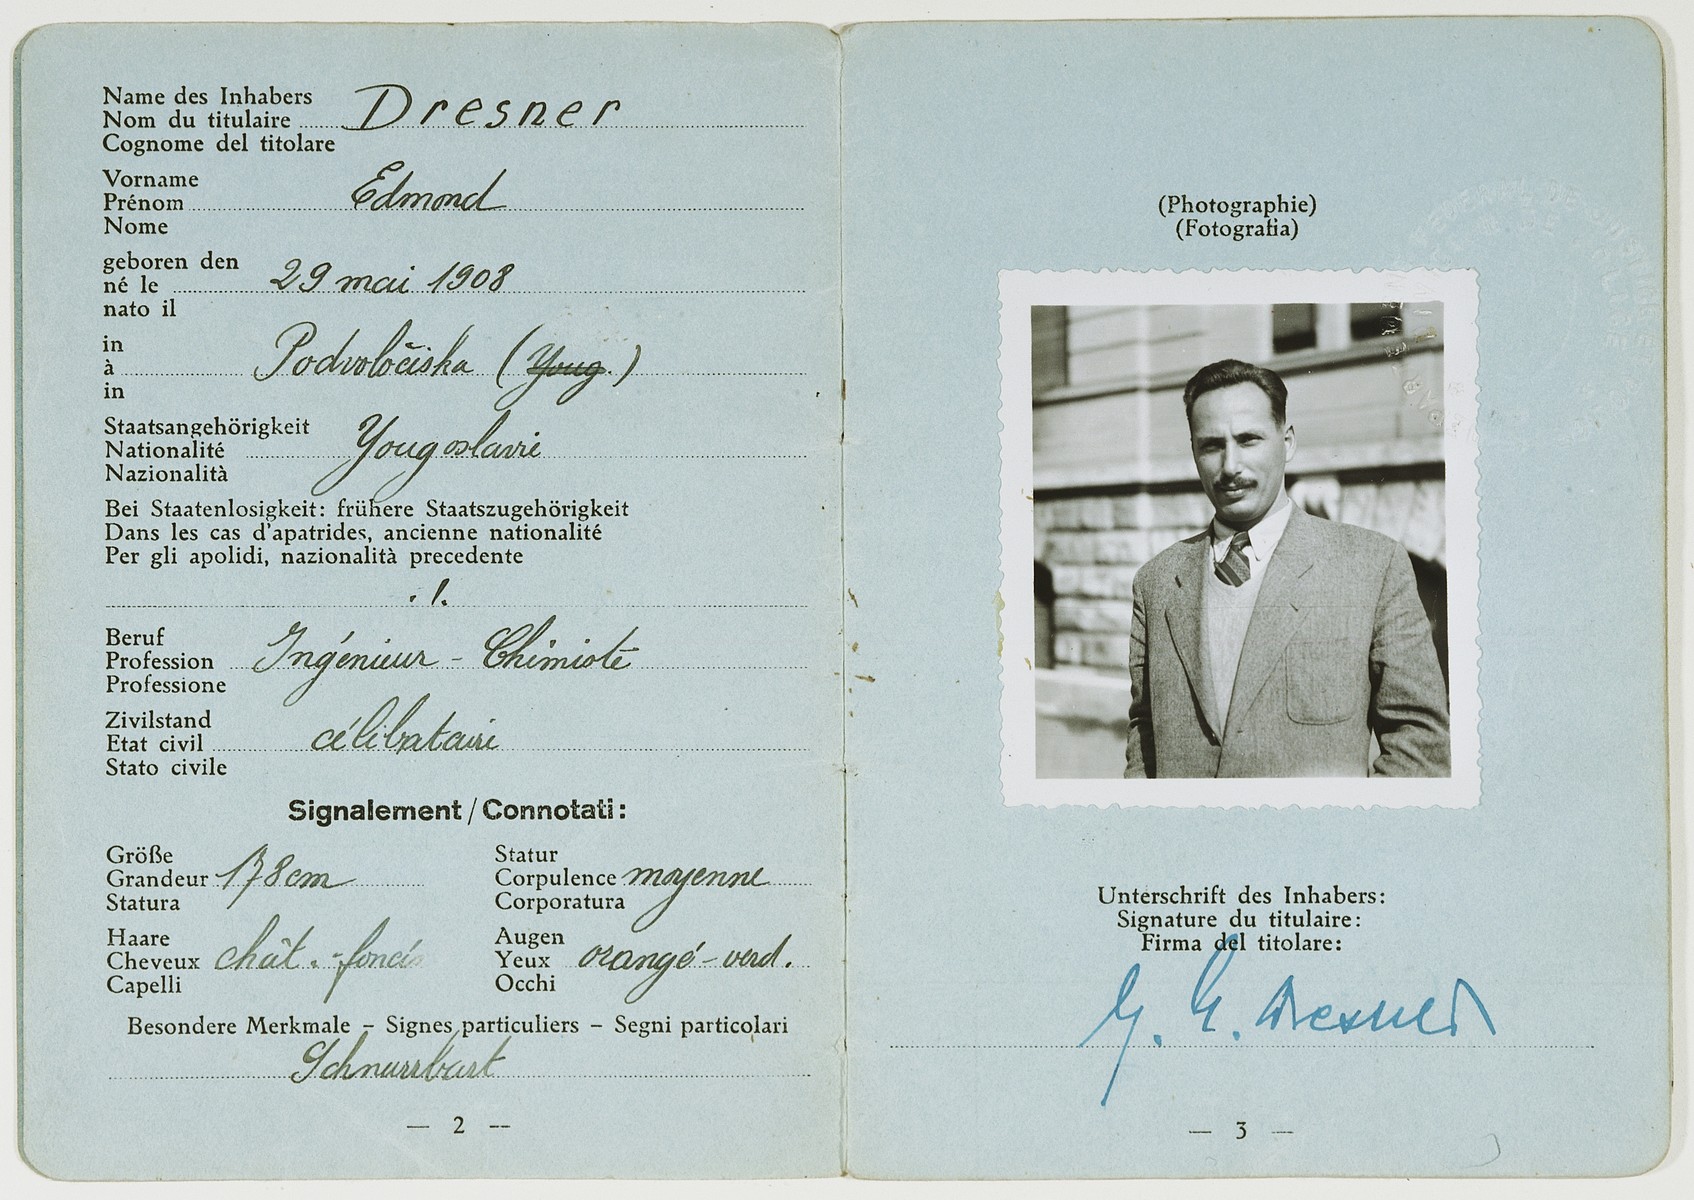 Refugee identification card issued to Edmund Dresner, a Jewish refugee, after his escape to Switzerland.